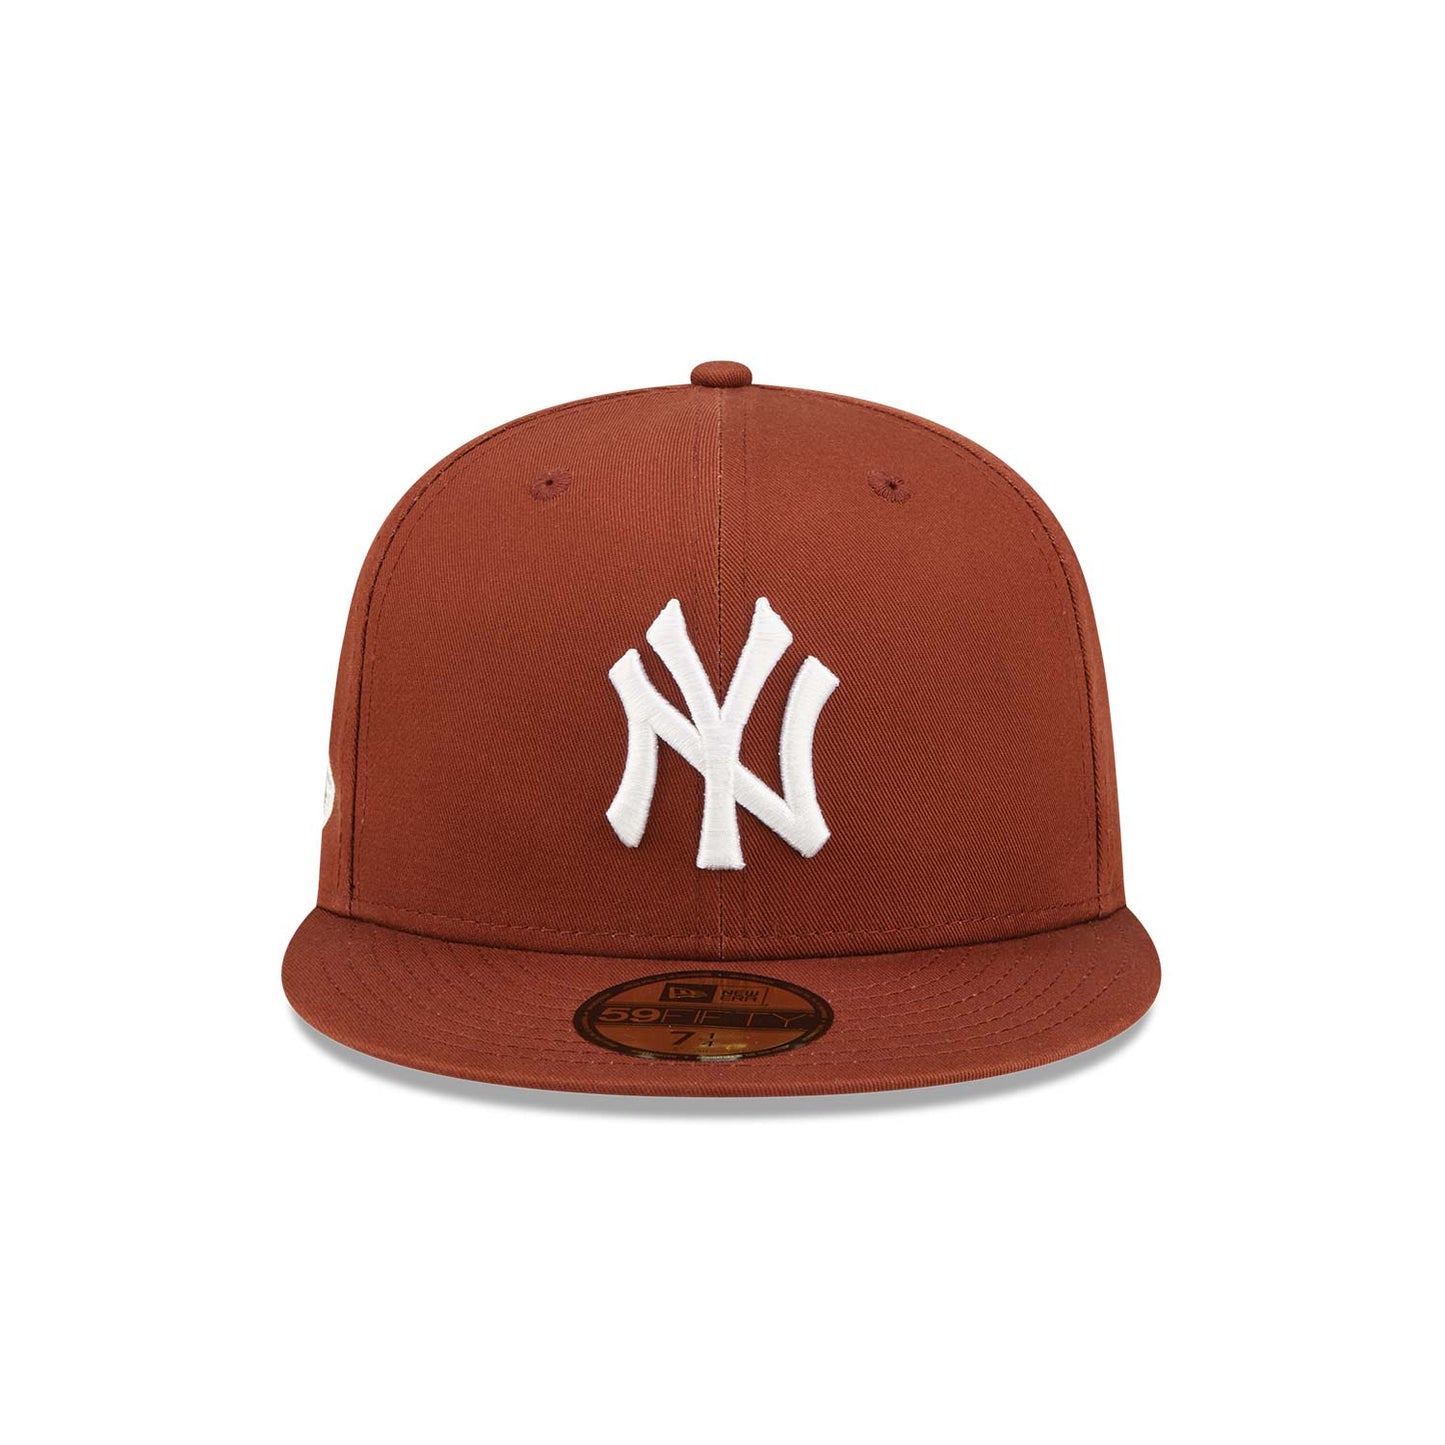 NEW ERA 59FIFTY MLB NEW YORK YANKEES INAUGURAL SEASON 2009 BROWN / BROWN UV FITTED CAP